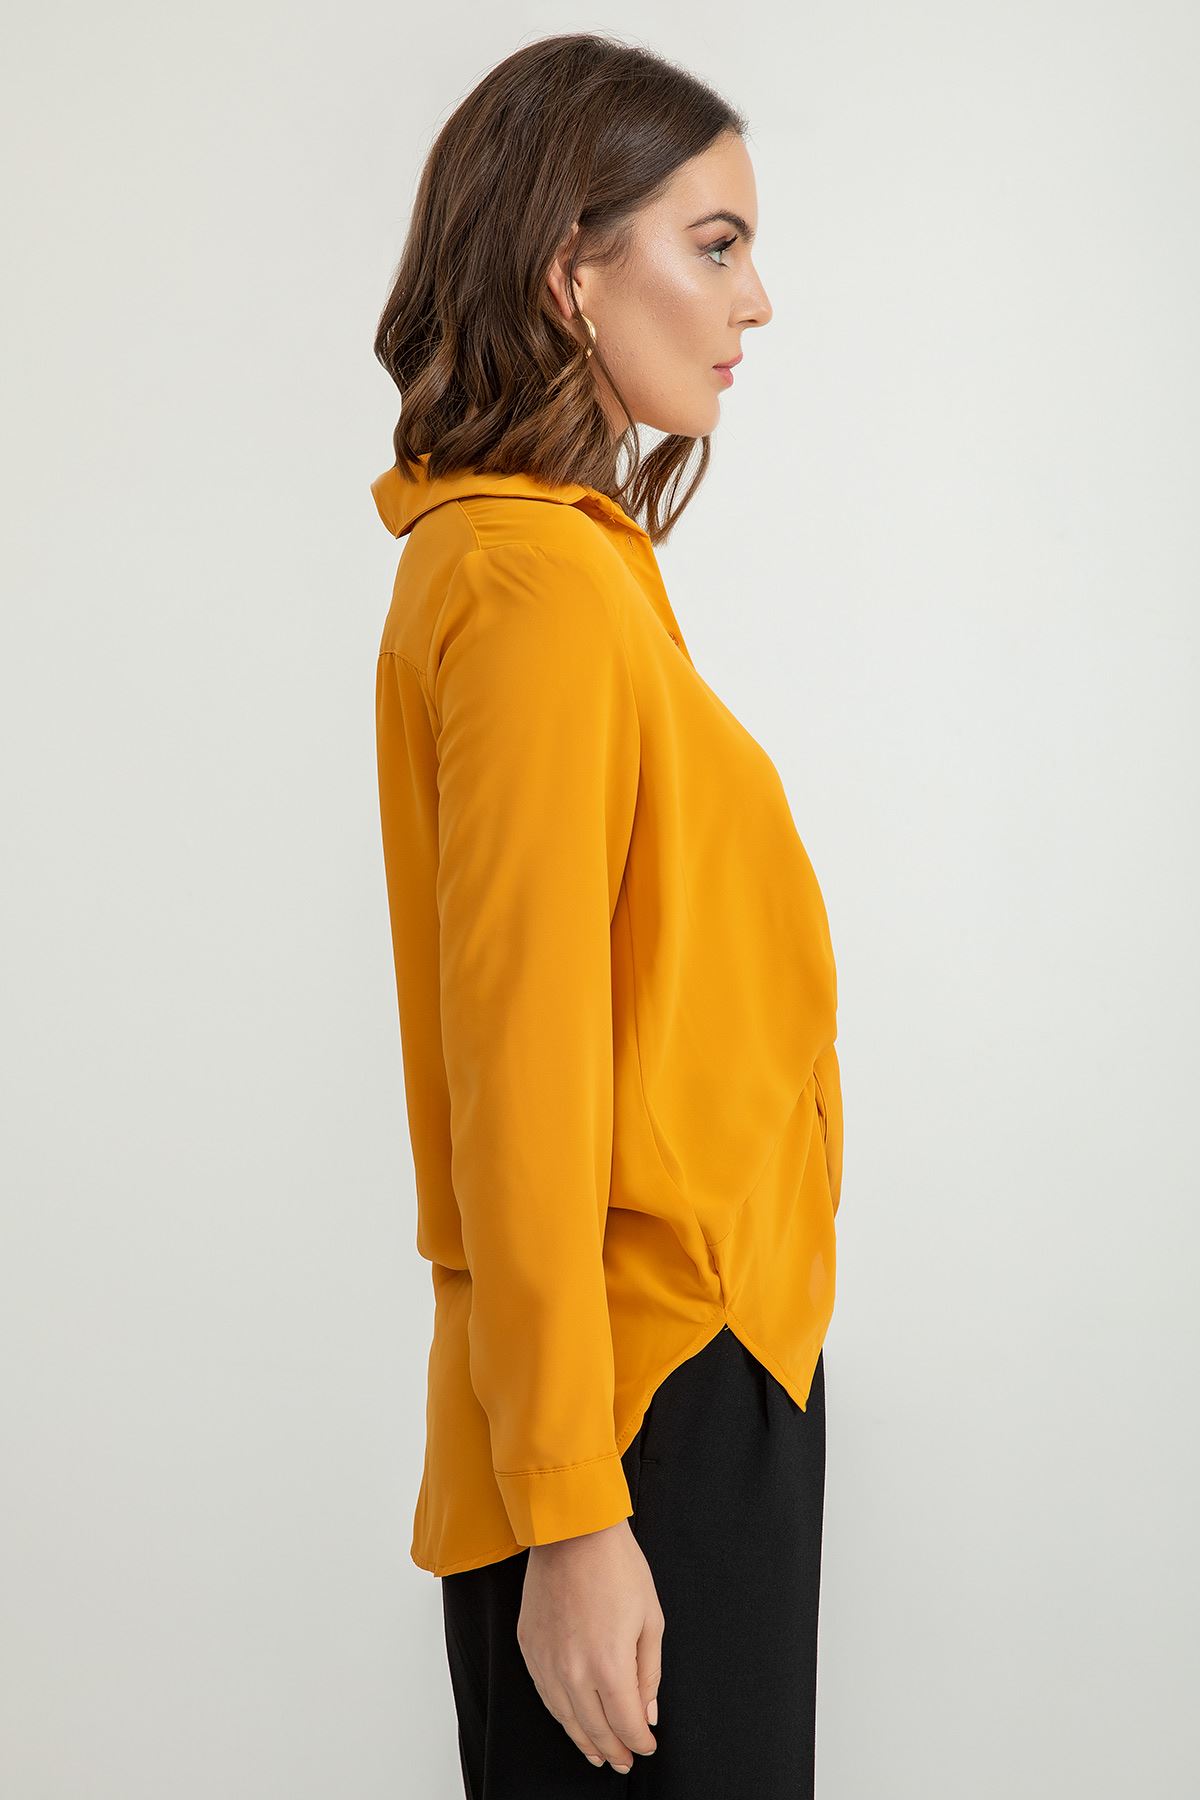 Jesica Fabric Long Sleeve Classical Button Front Women'S Shirt - Mustard